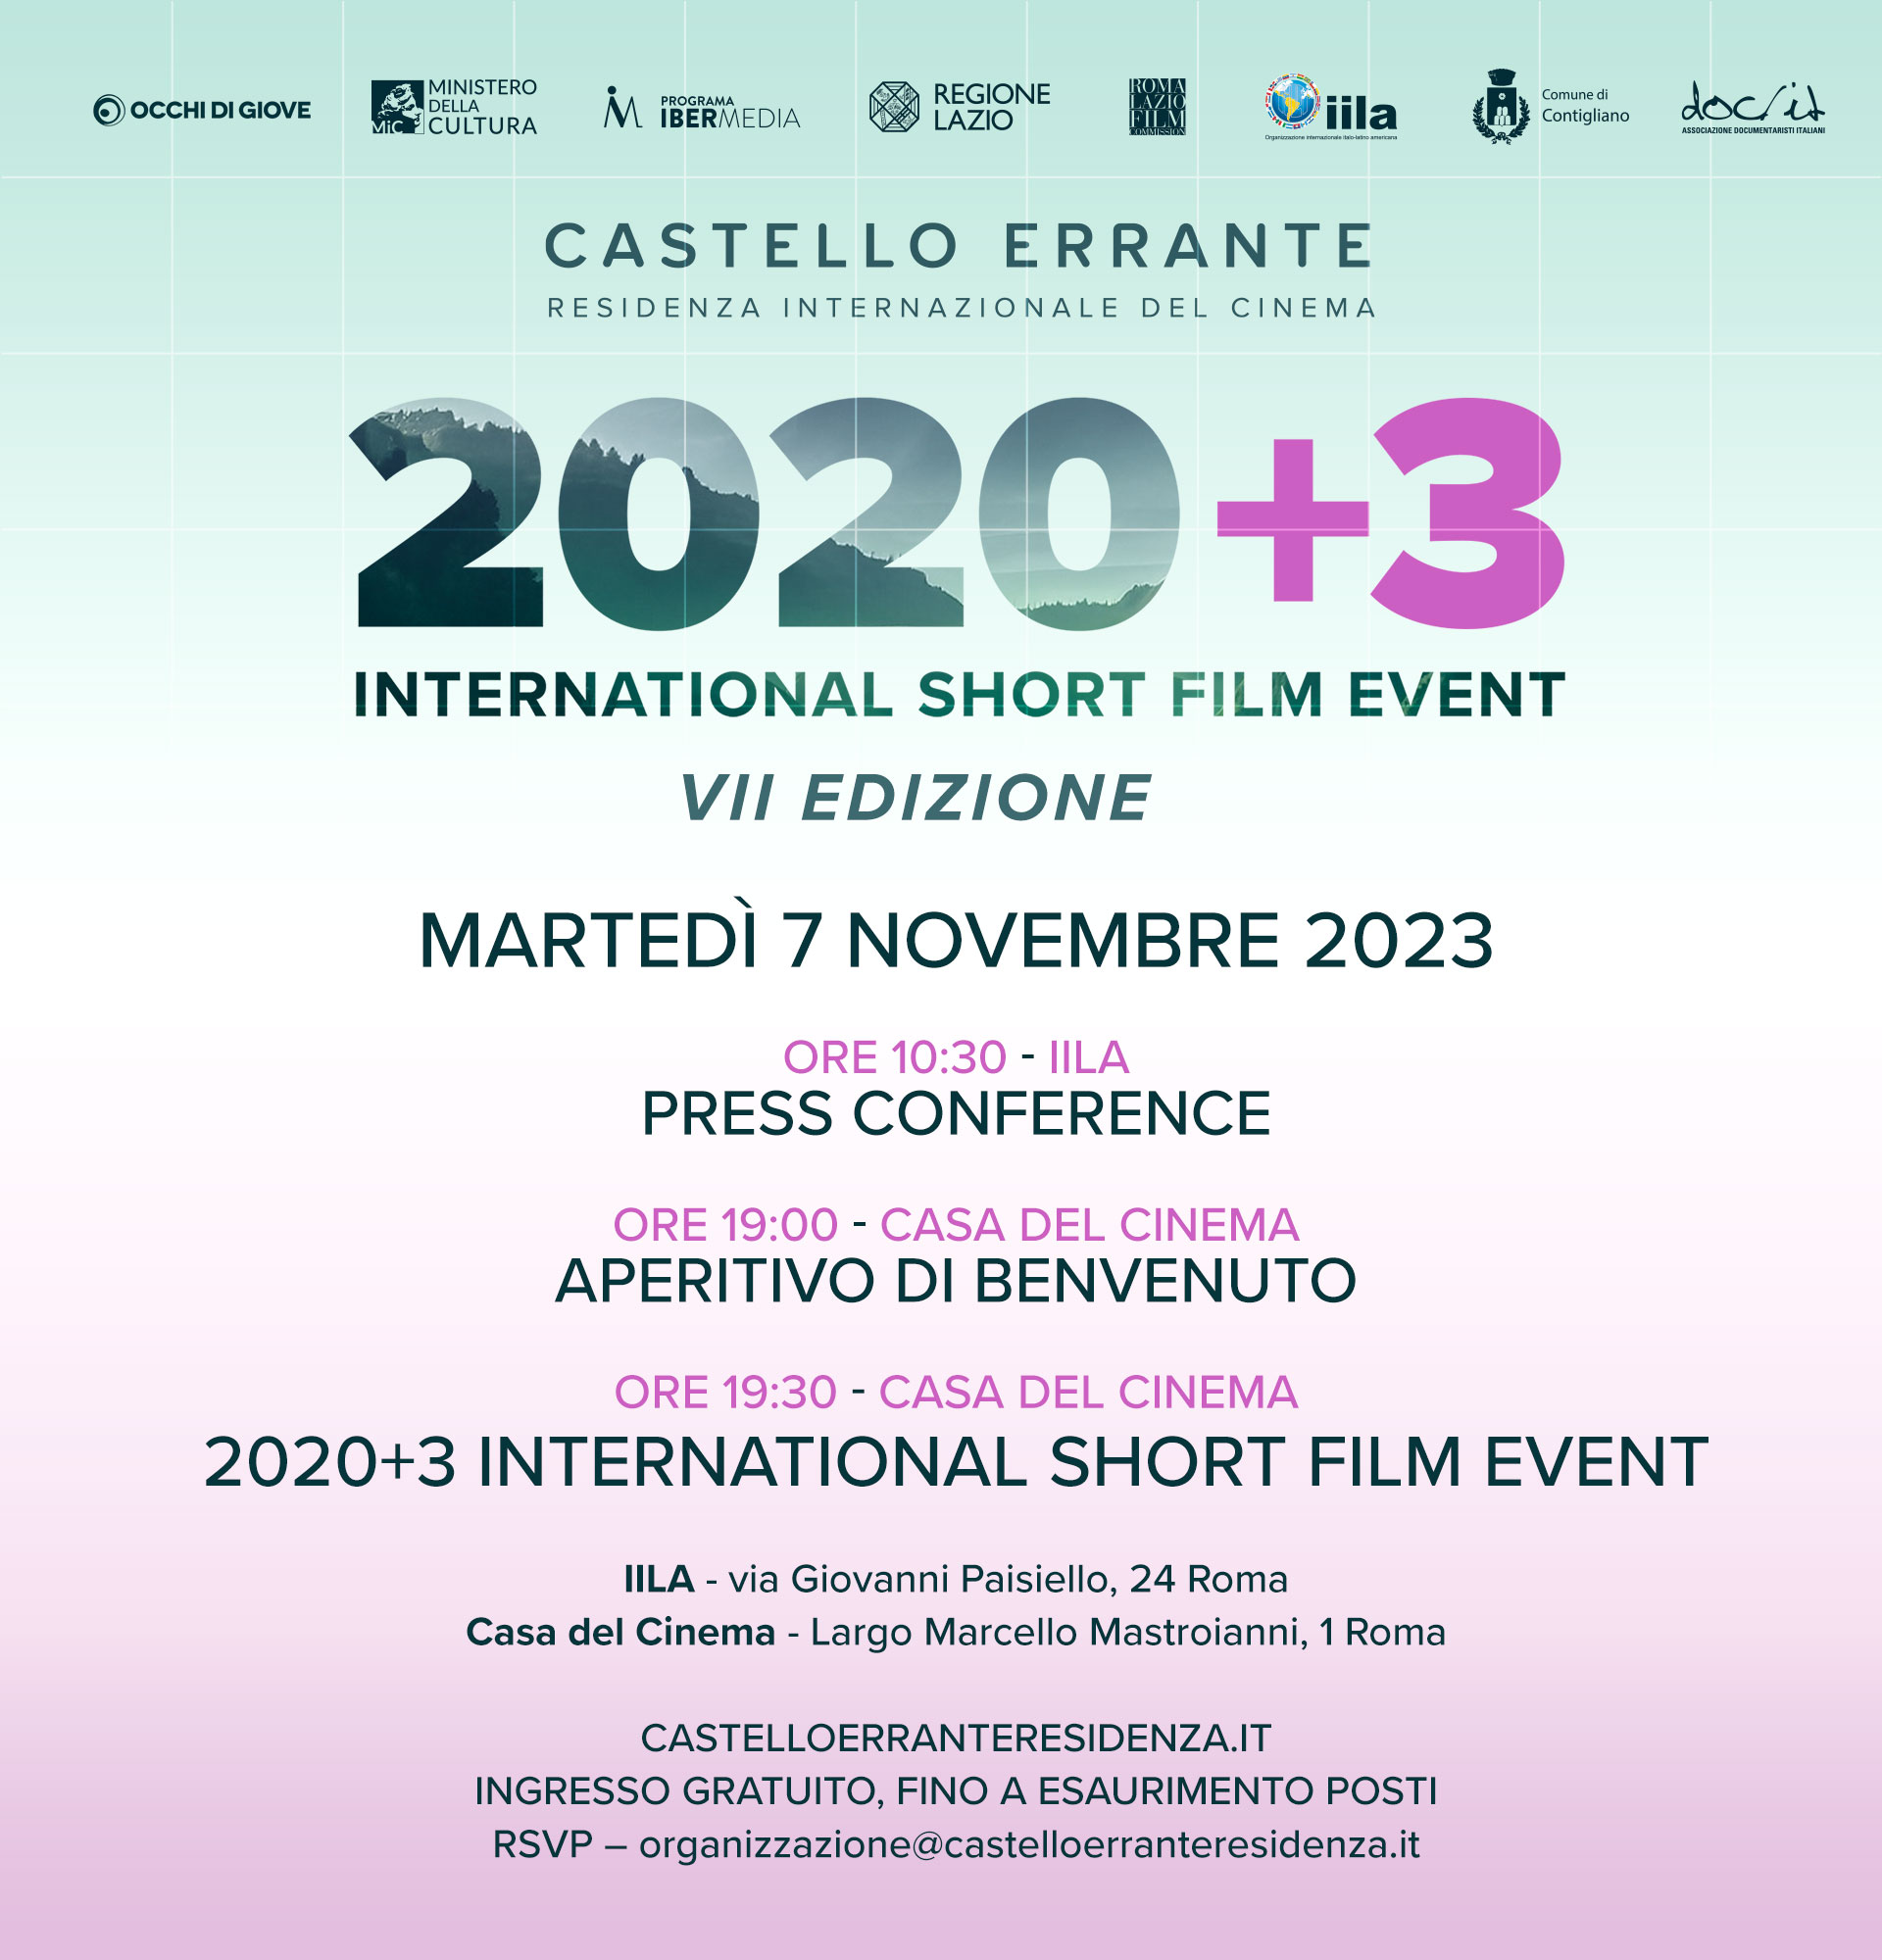 III EDIZIONE 2020+3 INTERNATIONAL SHORT FILM EVENT